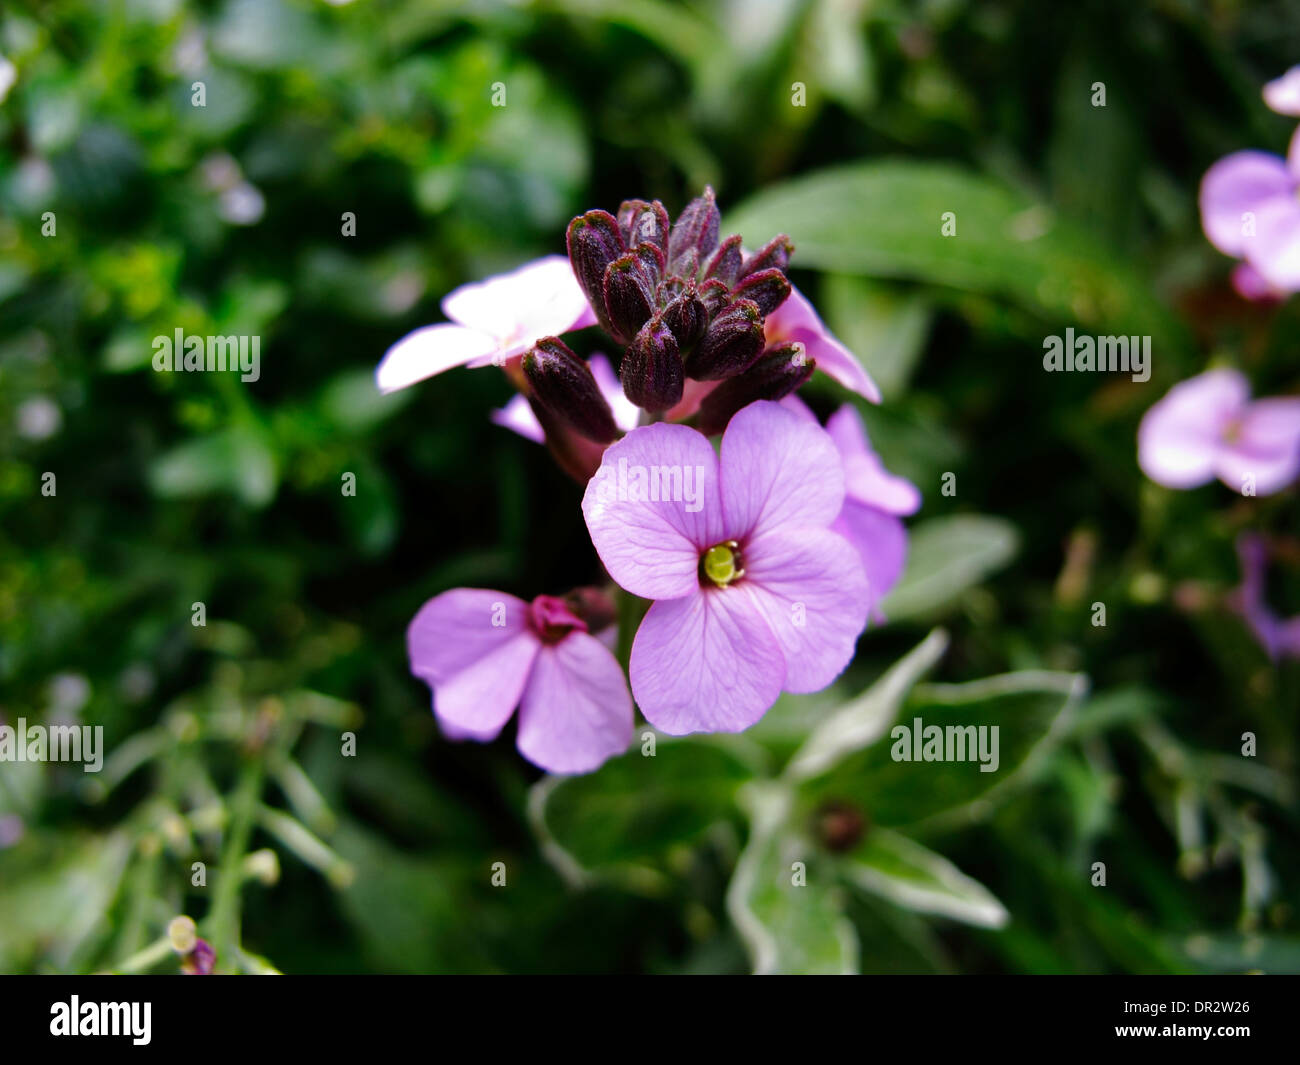 An image of a garden flower erysimum - Bowles Mauve Stock Photo